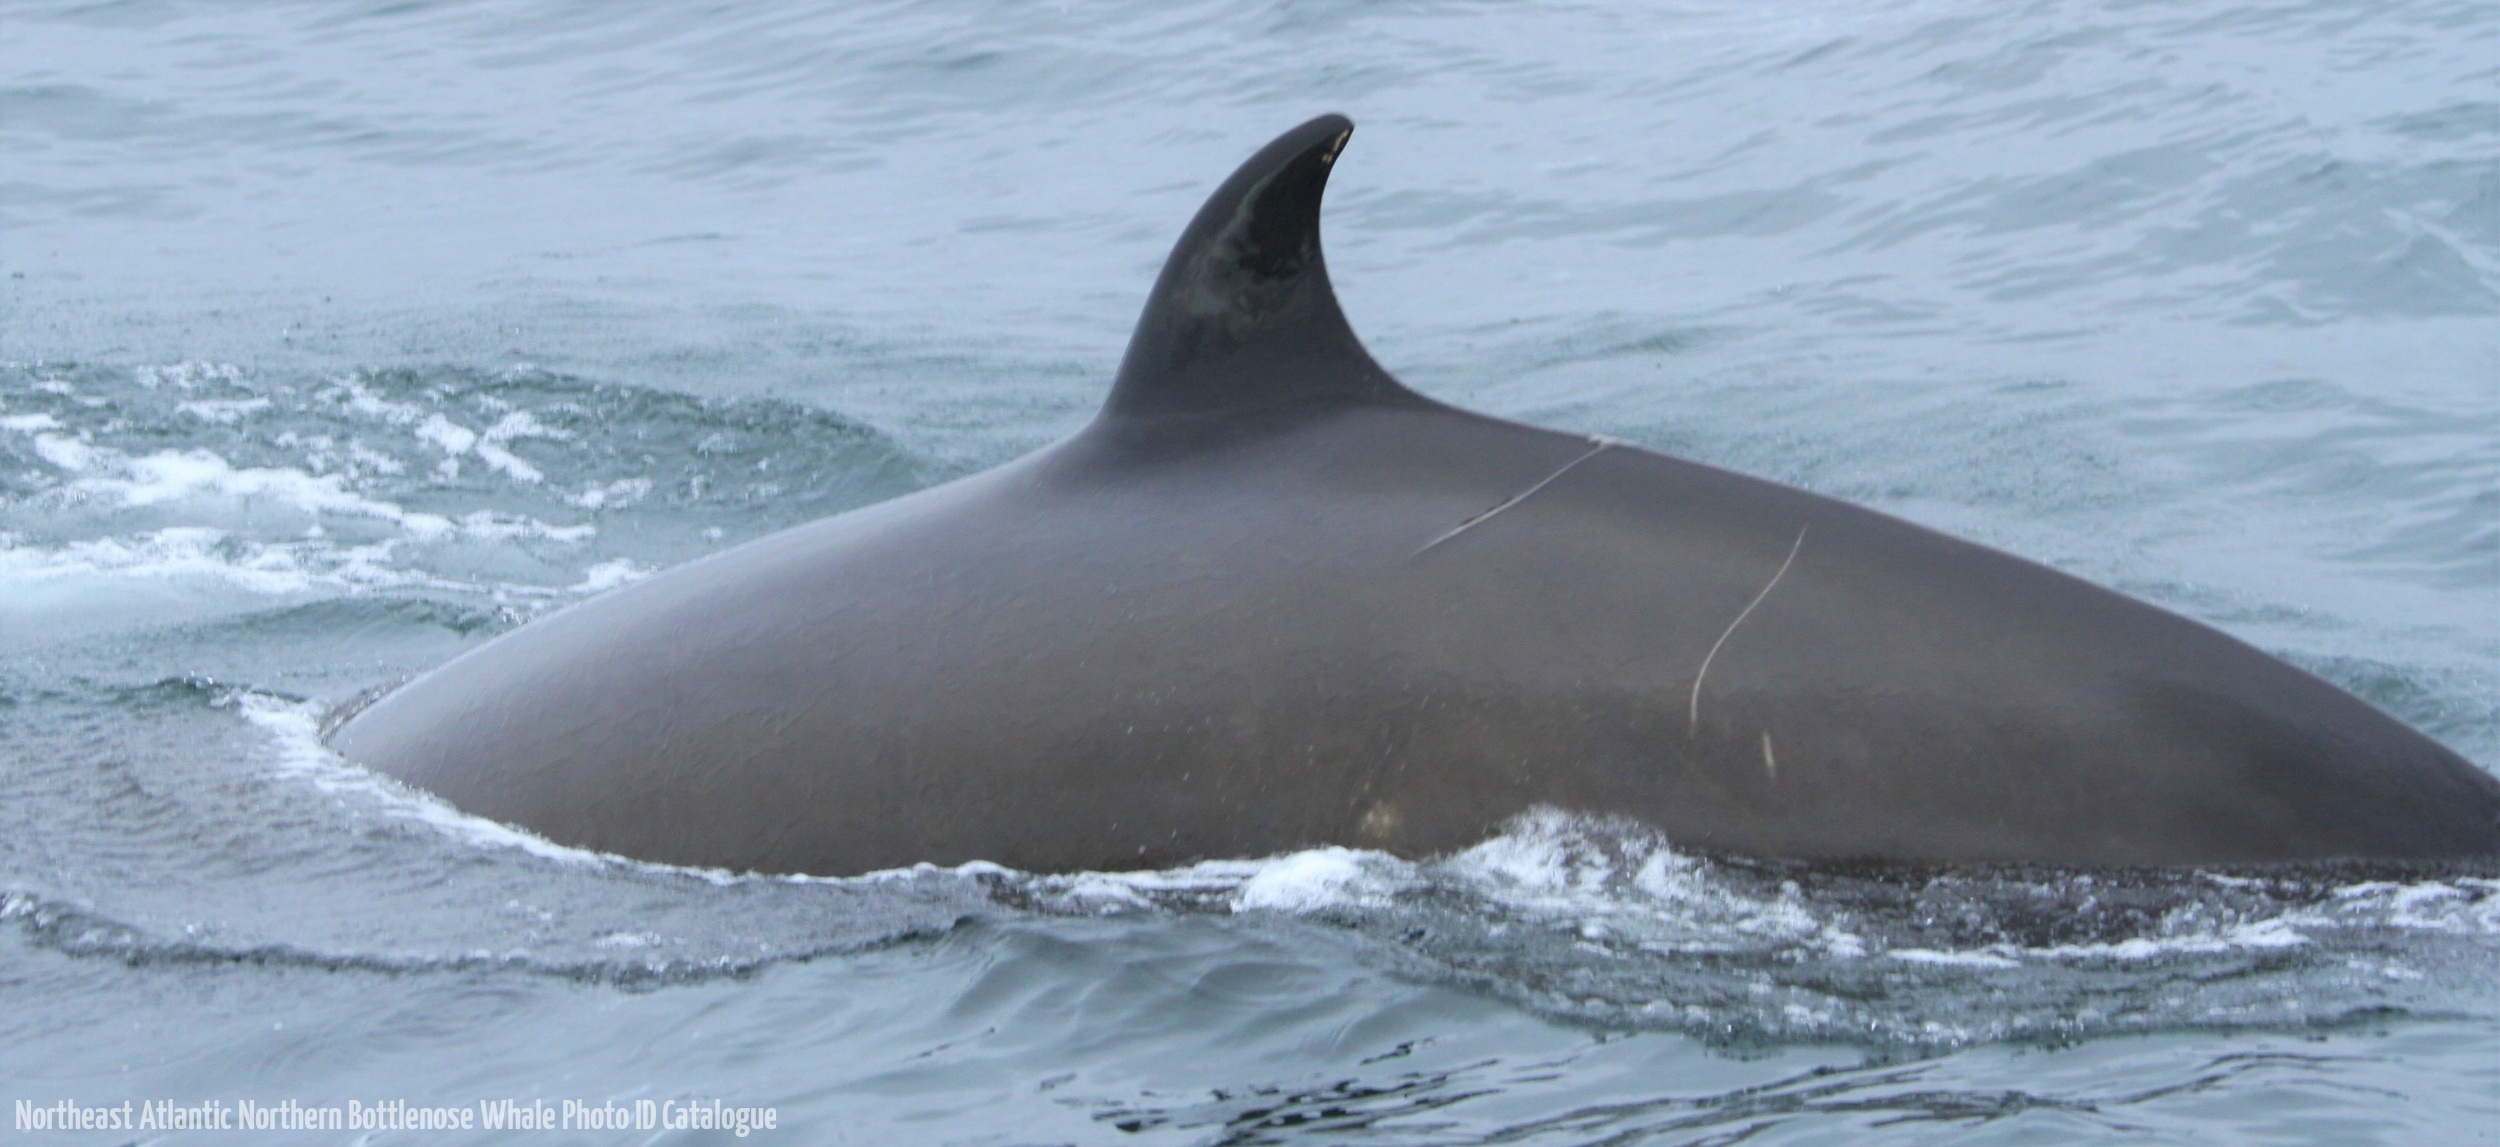 Whale ID: 0006,  Date taken: 24-06-2013,  Photographer: Paul H. Ensor